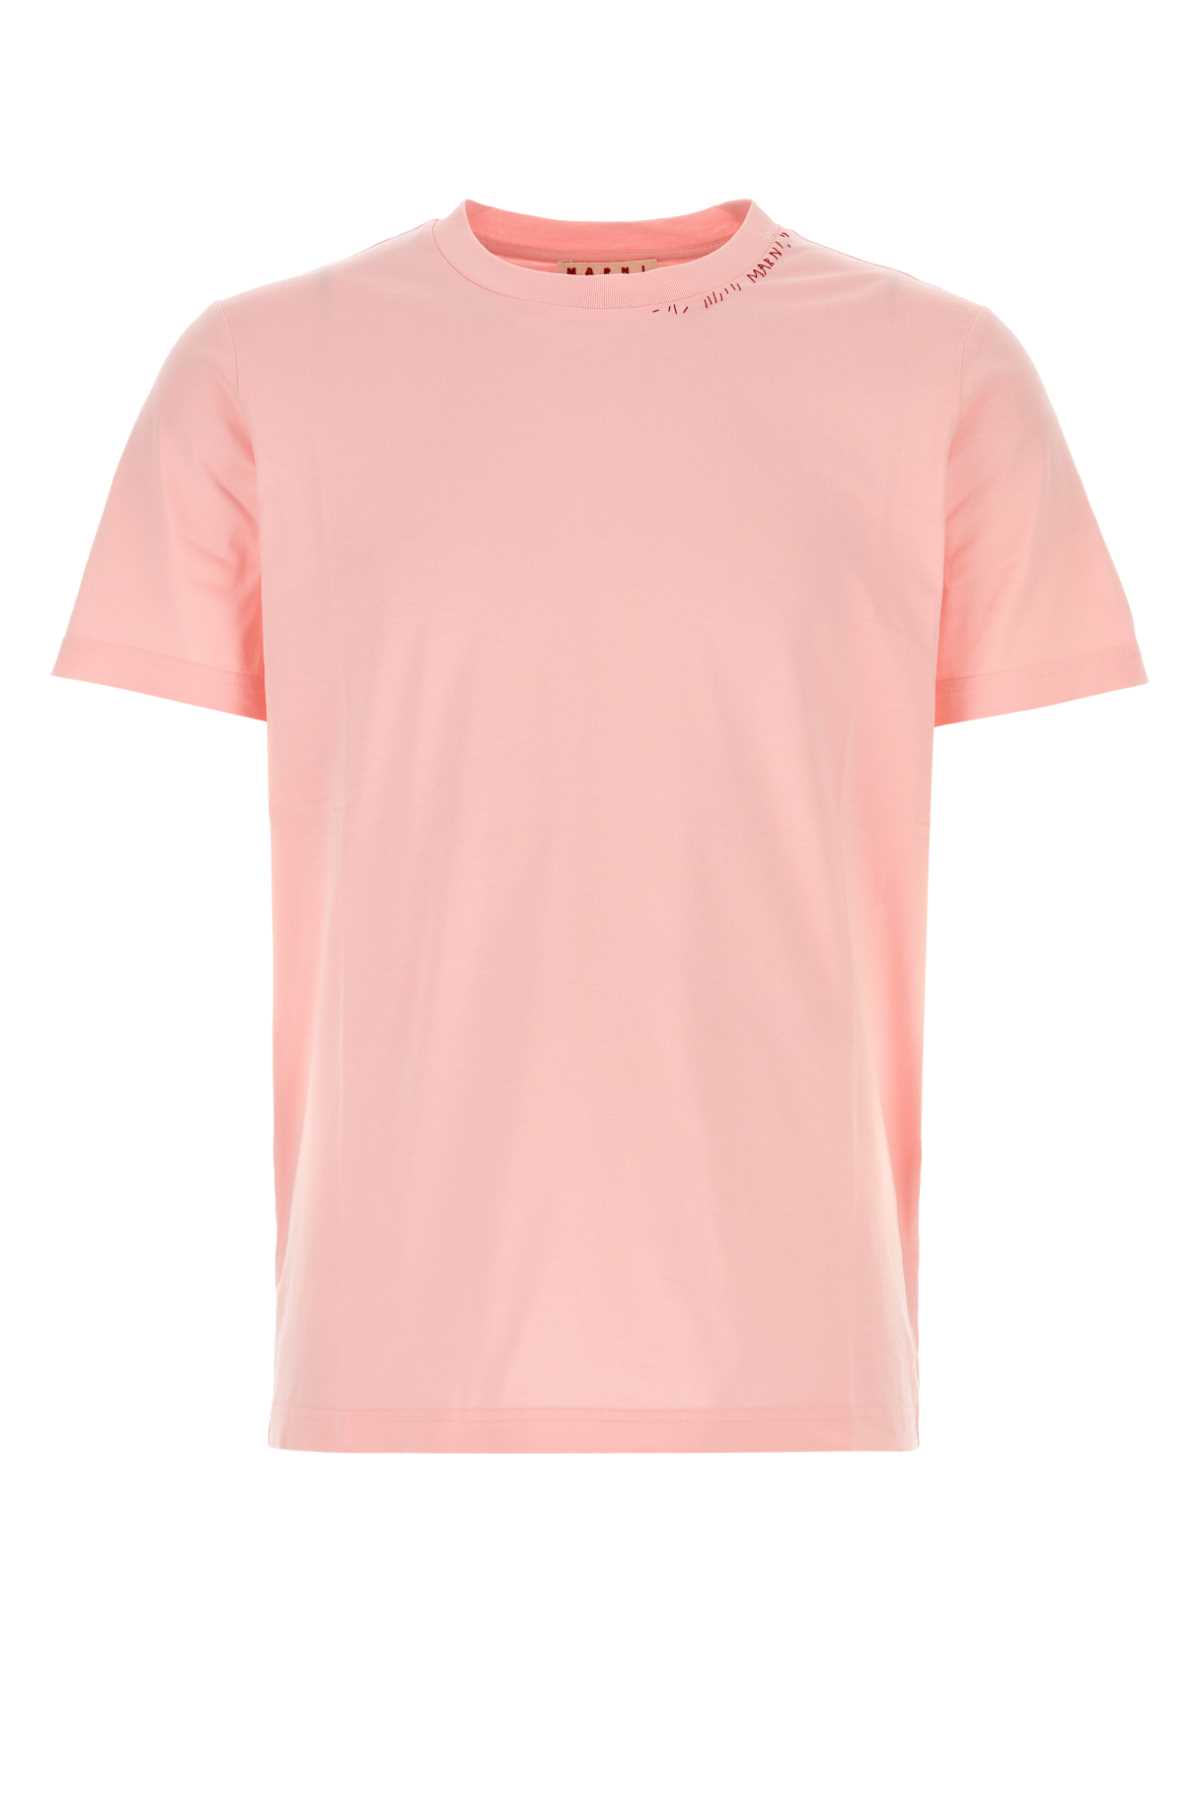 Marni Pink Cotton T-shirt In Magnolia